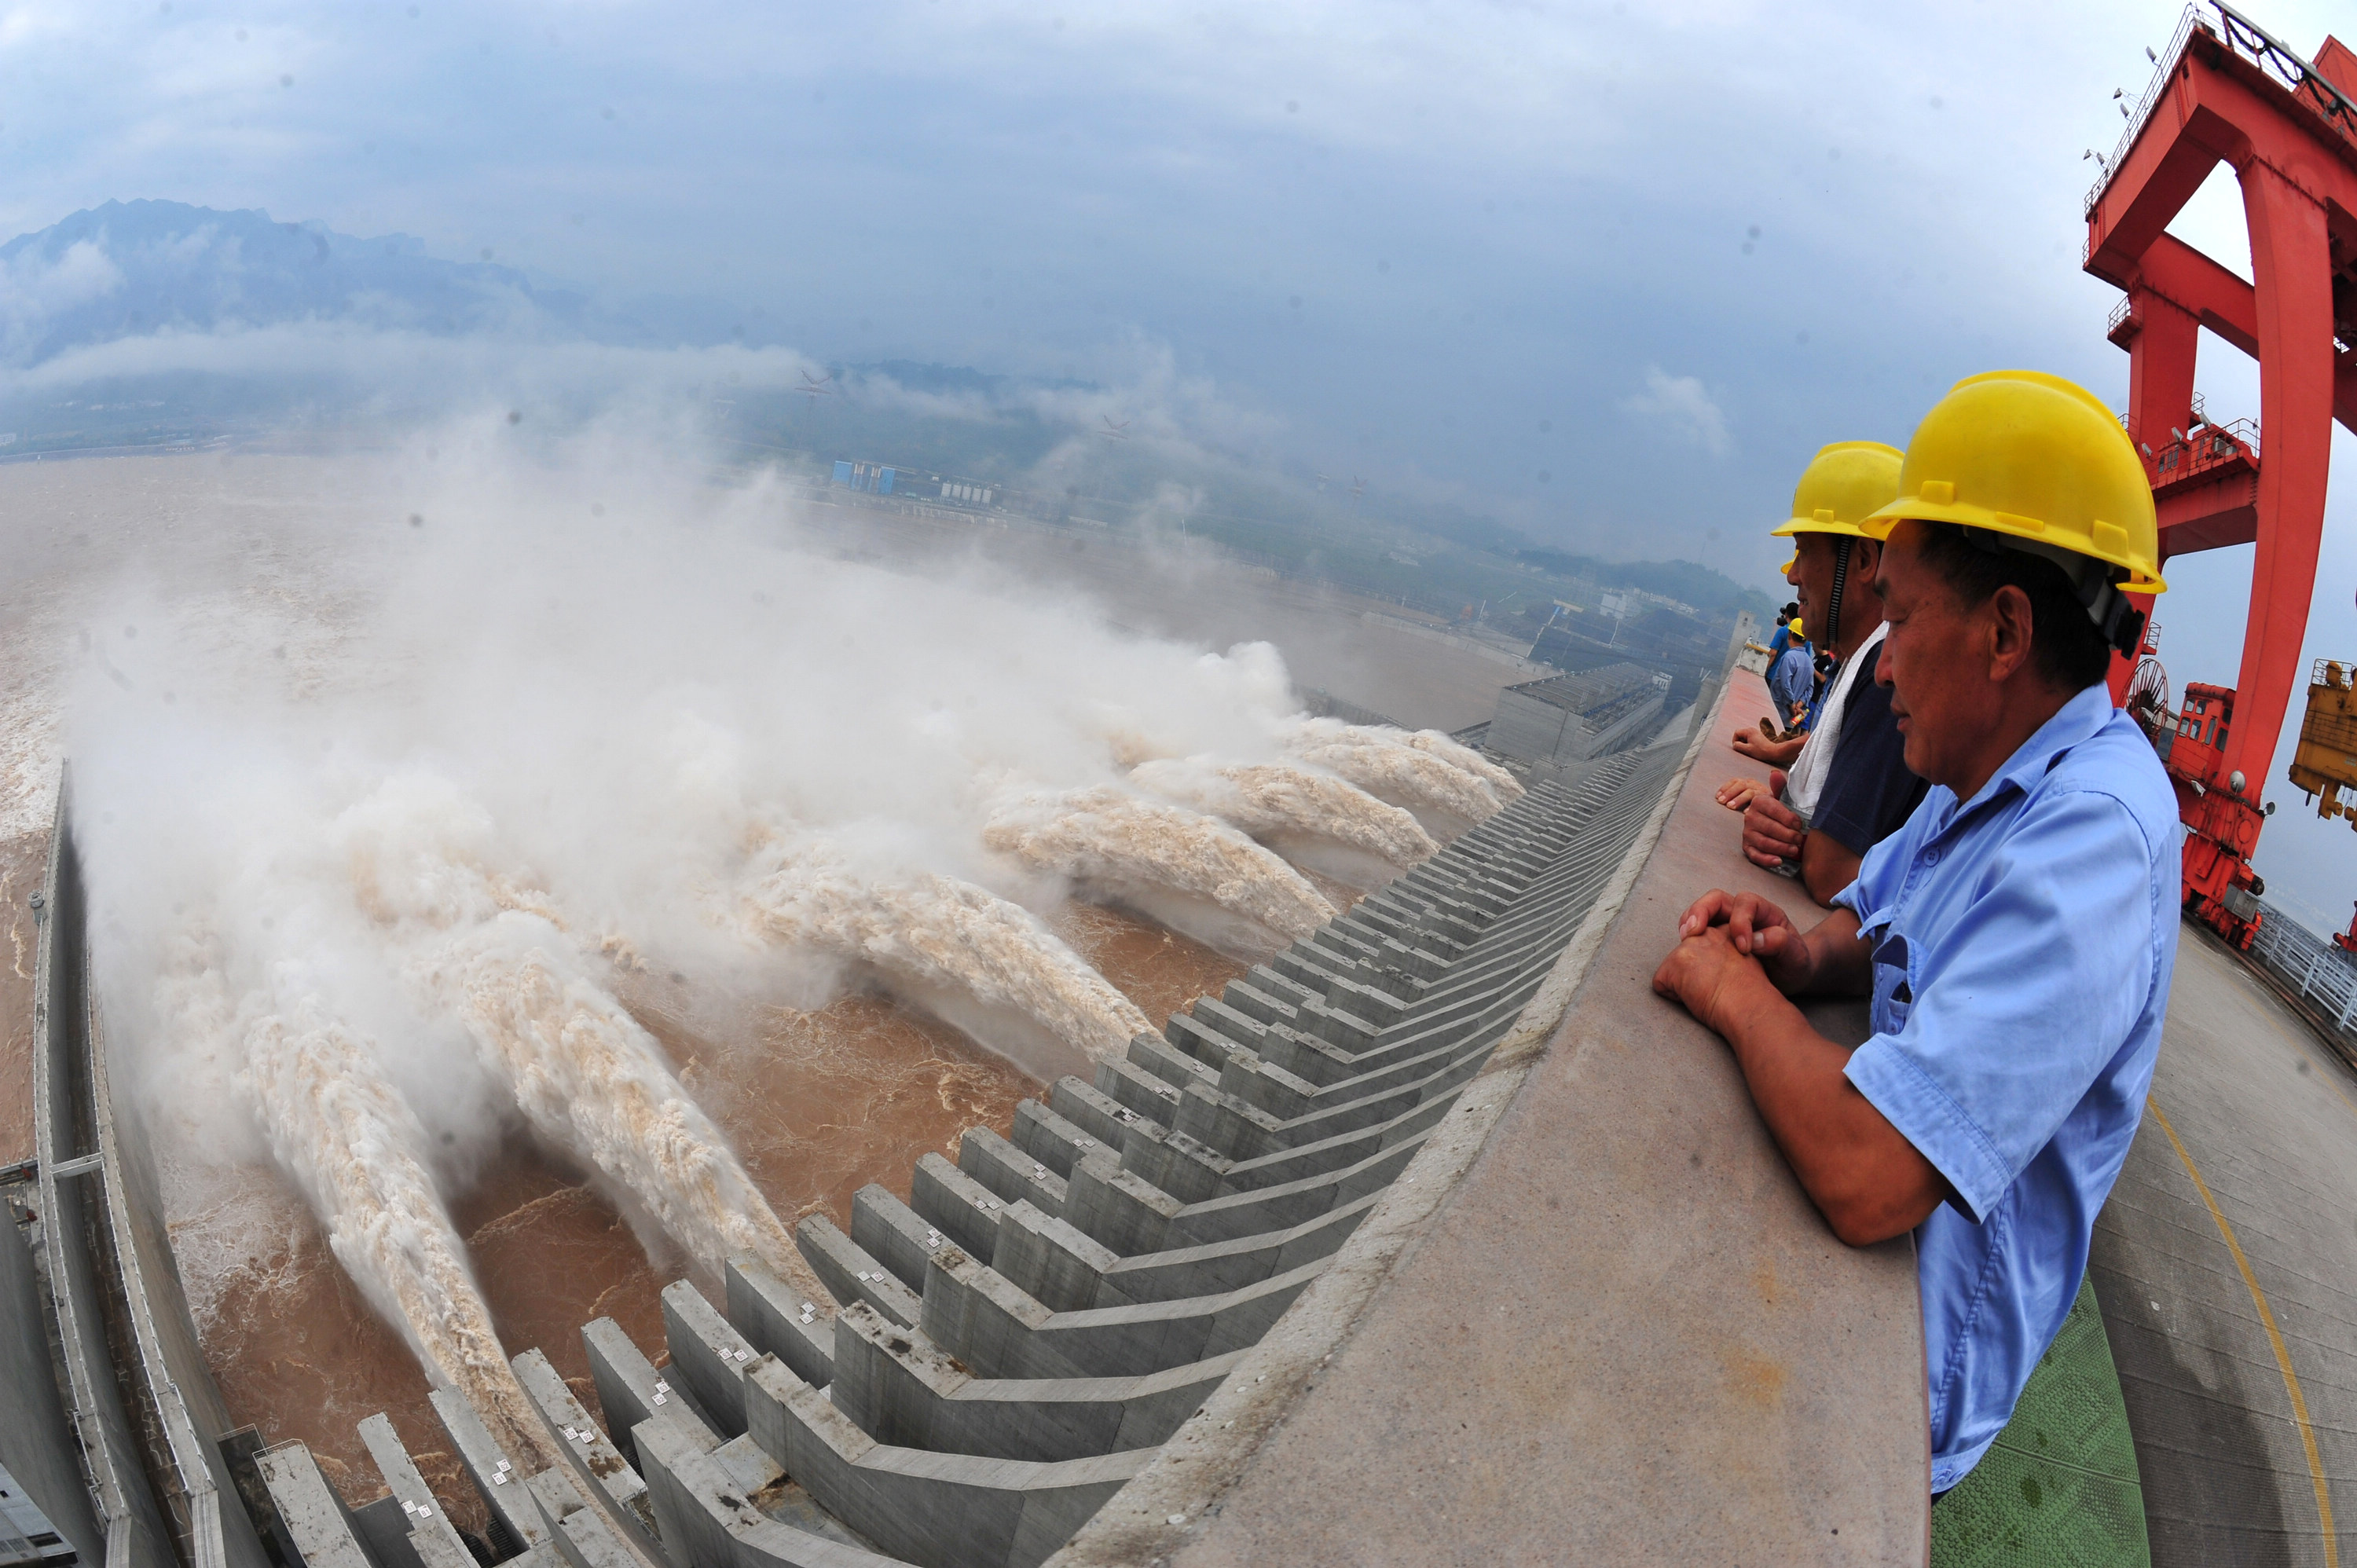 Water power station. Три ущелья ГЭС. Три ущелья, Китай (22,5 ГВТ). Дамба три ущелья в Китае. ГЭС 3 ущелья в Китае.